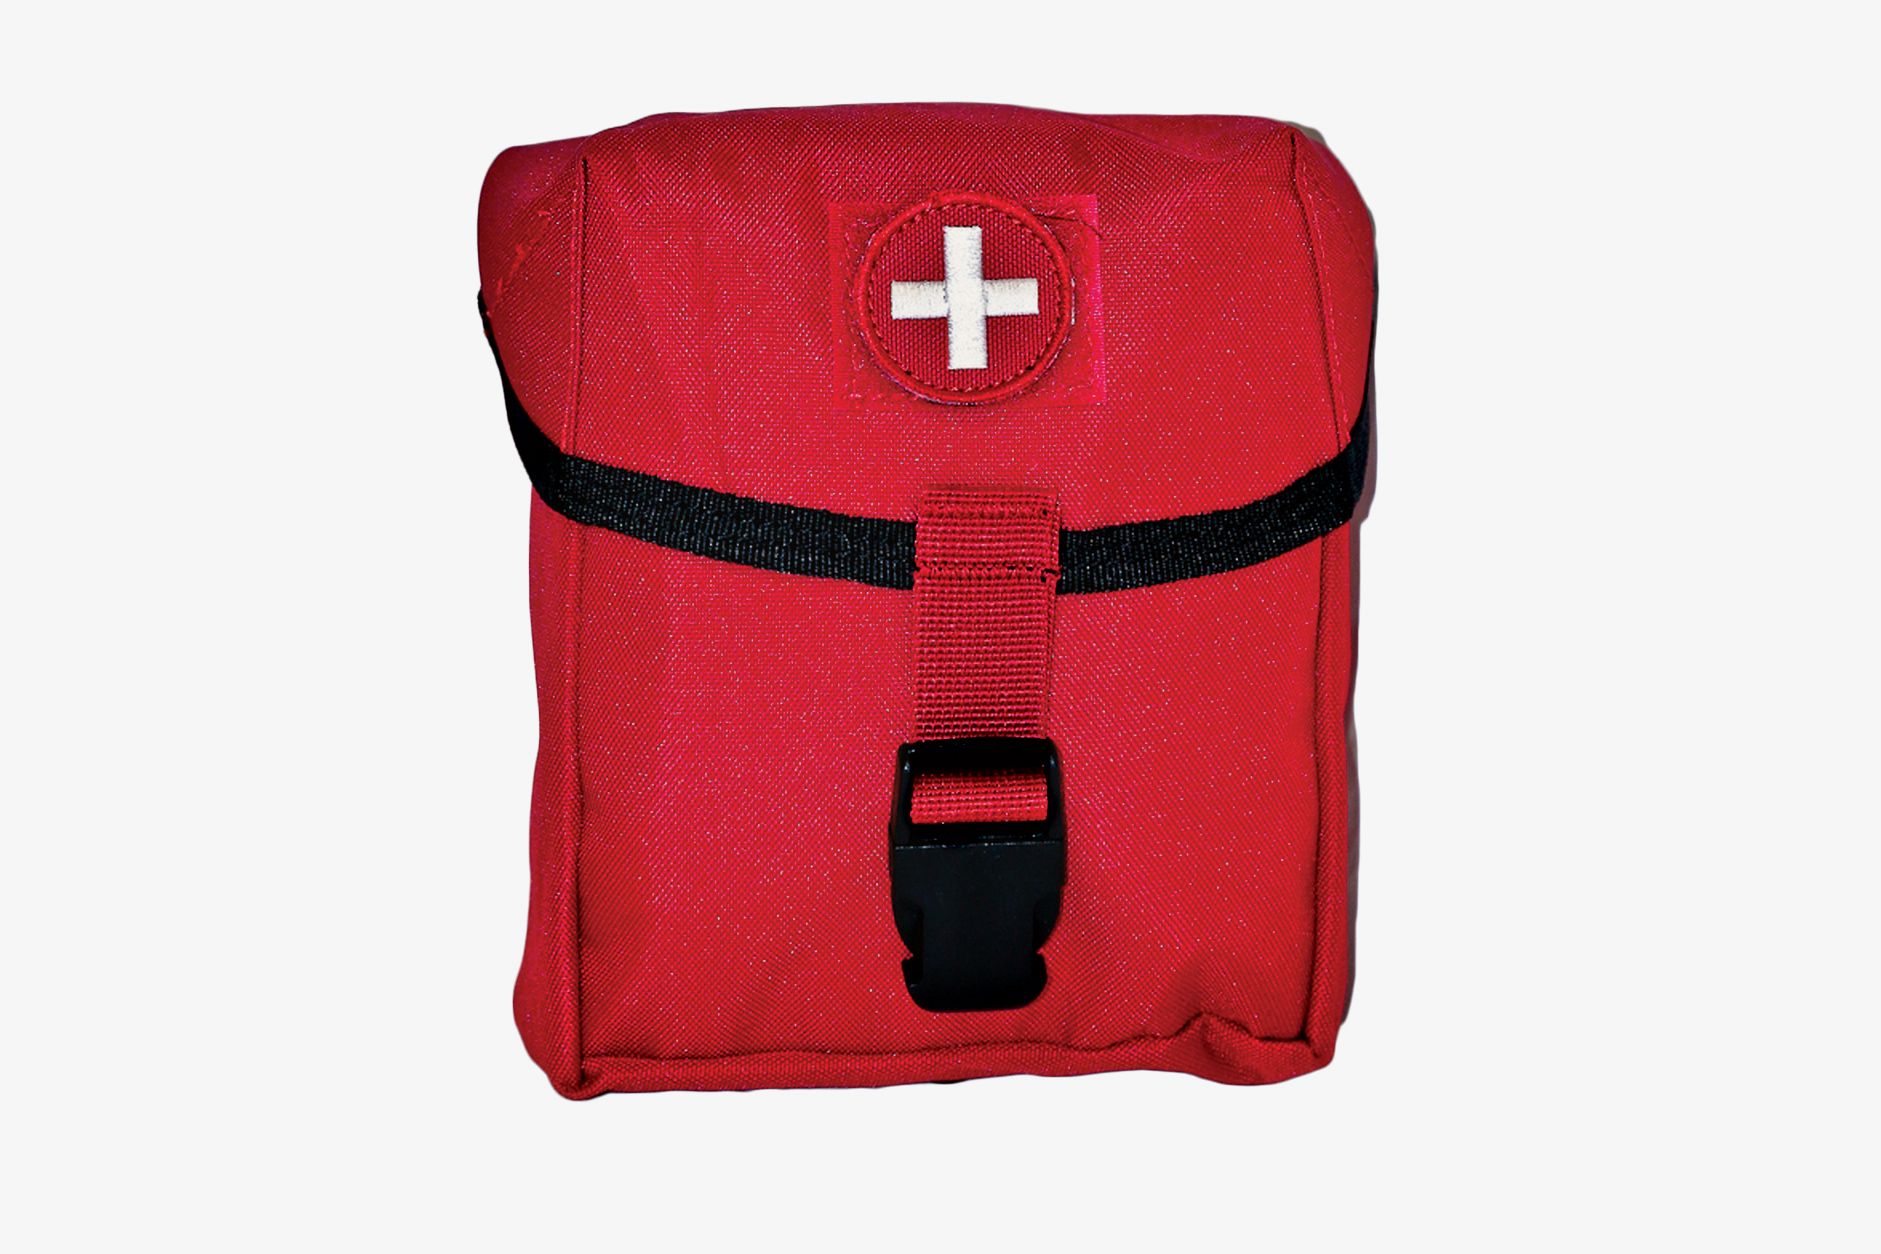 Johnson Johnson Travel Ready Portable Emergency First Aid Kit 80